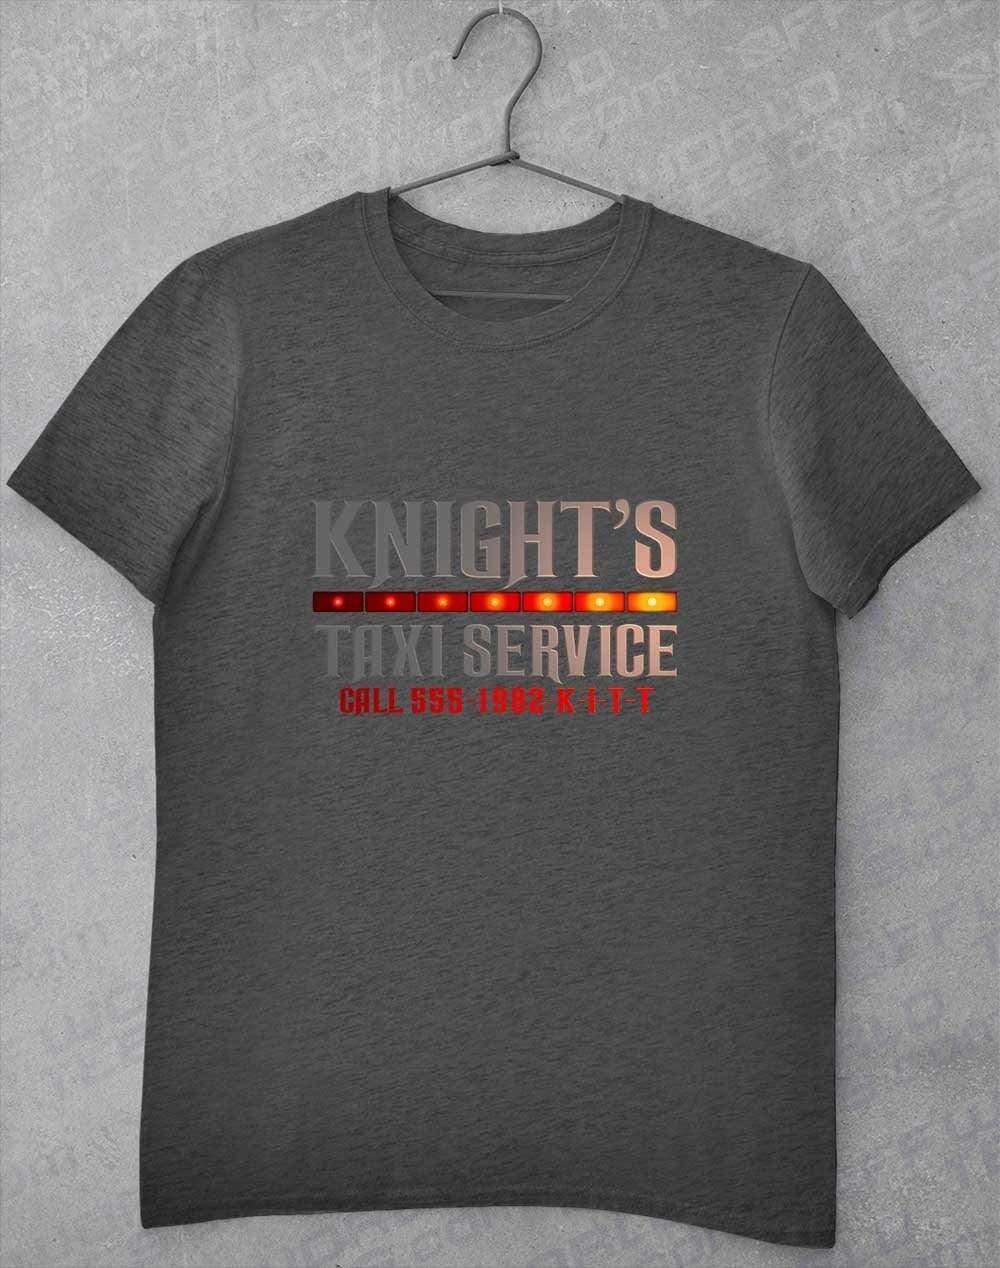 Knight's Taxi Sevice T-Shirt S / Dark Heather  - Off World Tees